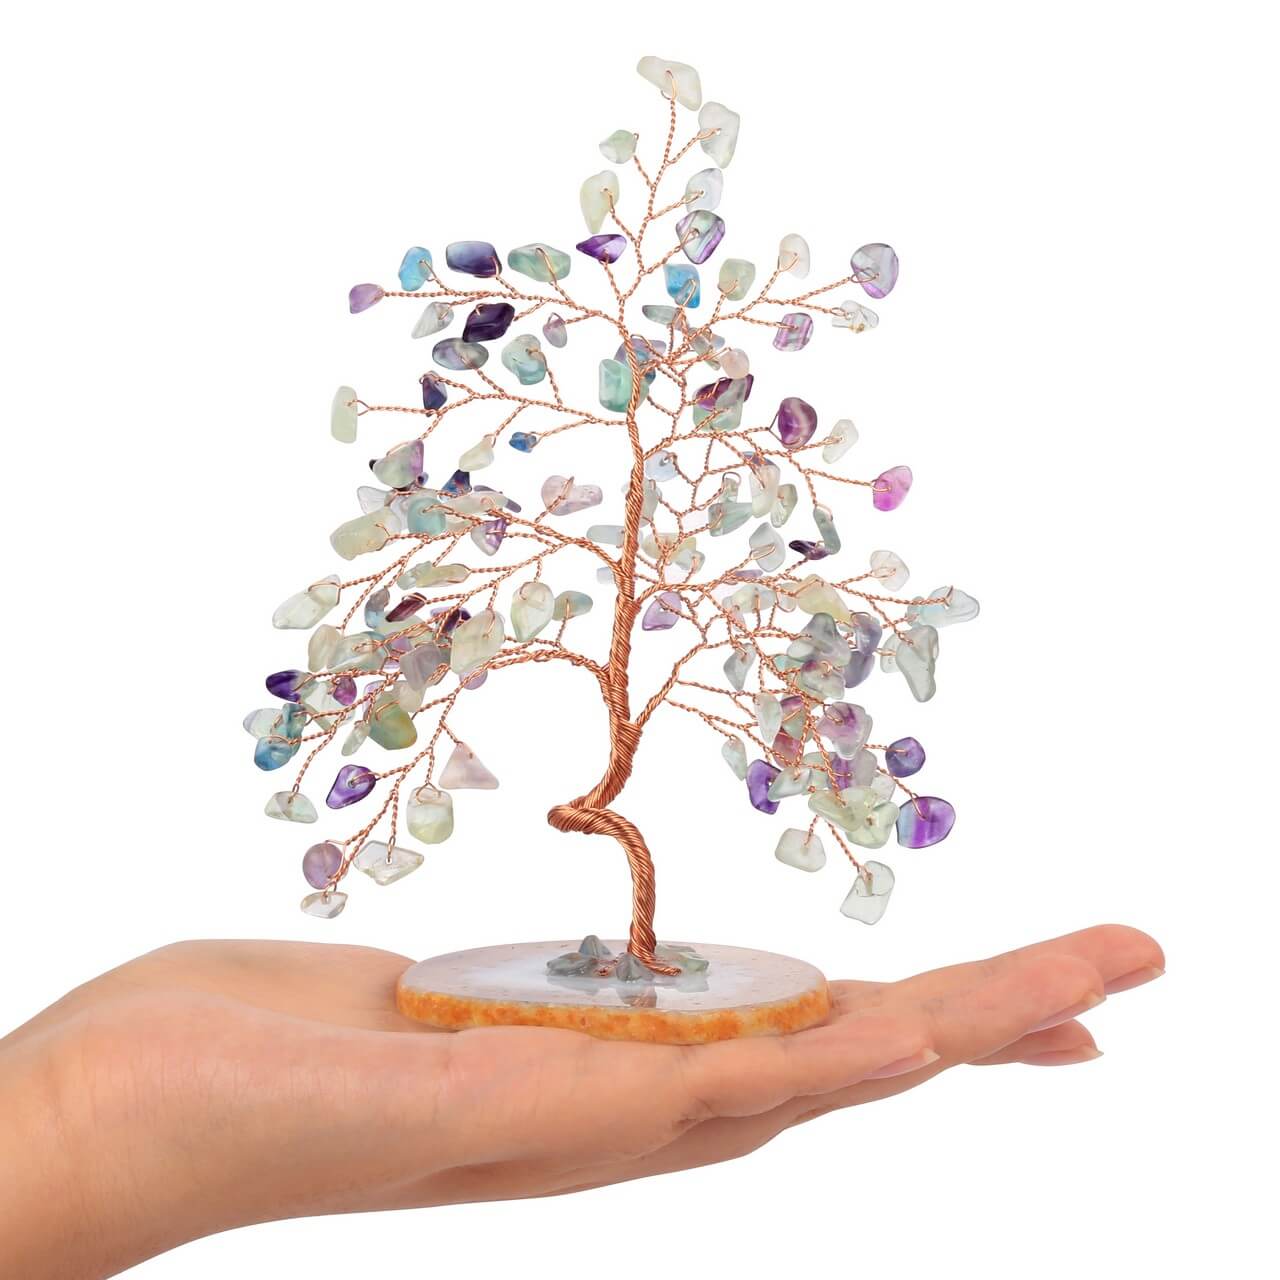 jovivi chakra healing crystals money tree figurine with natural